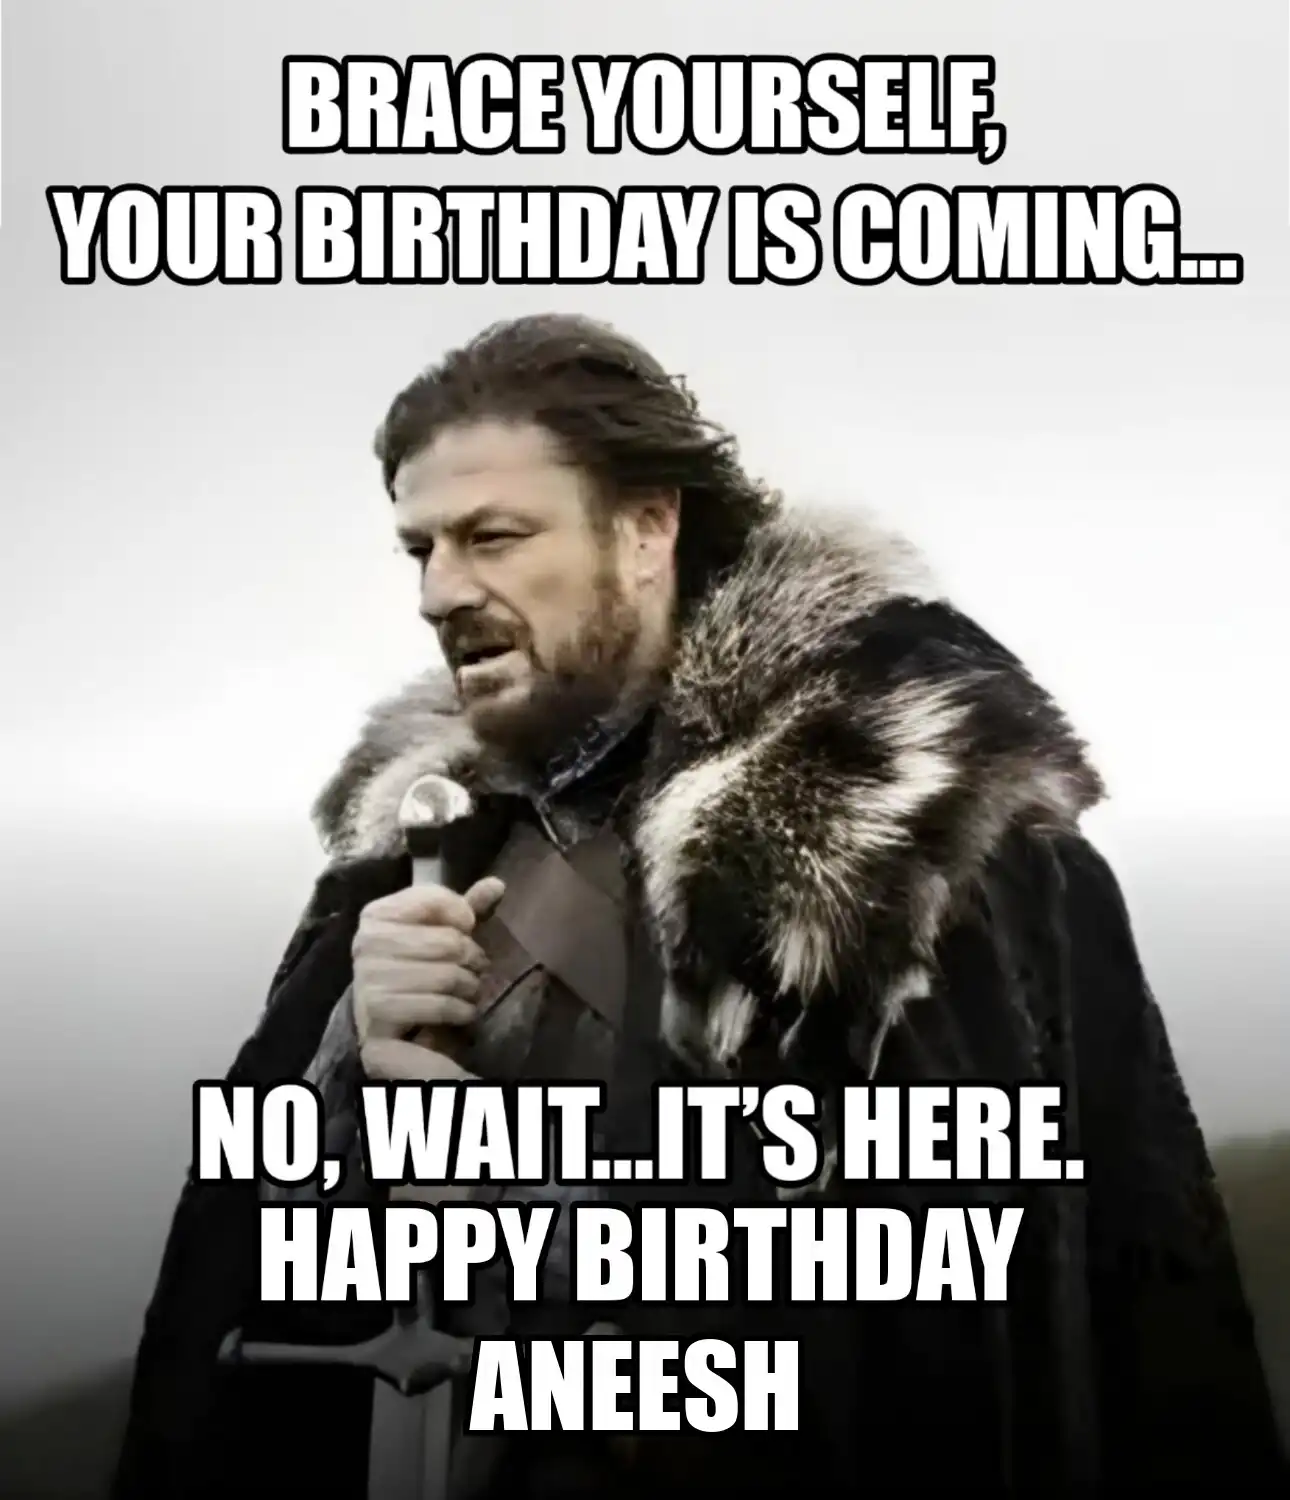 Happy Birthday Aneesh Brace Yourself Your Birthday Is Coming Meme